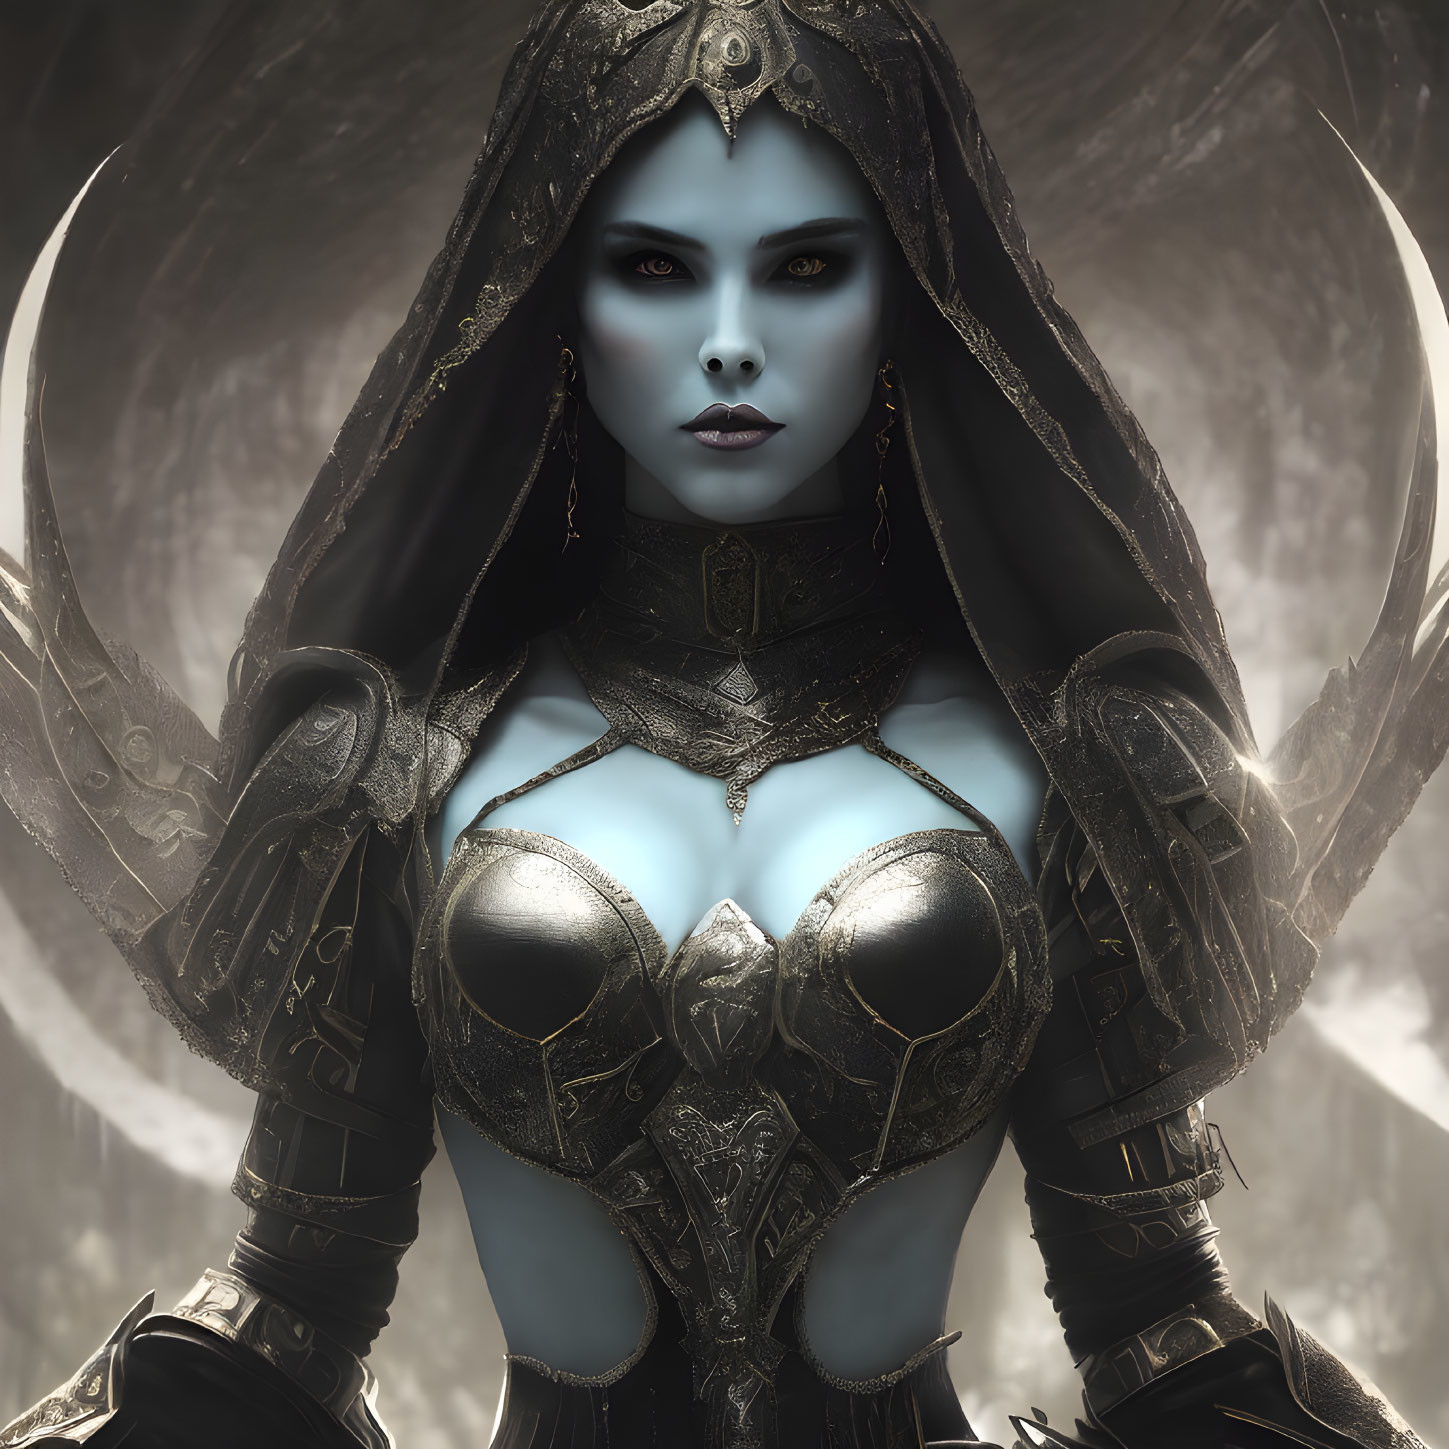 Pale-skinned woman in dark lips with glowing eyes, adorned in ornate hood and metallic armor in